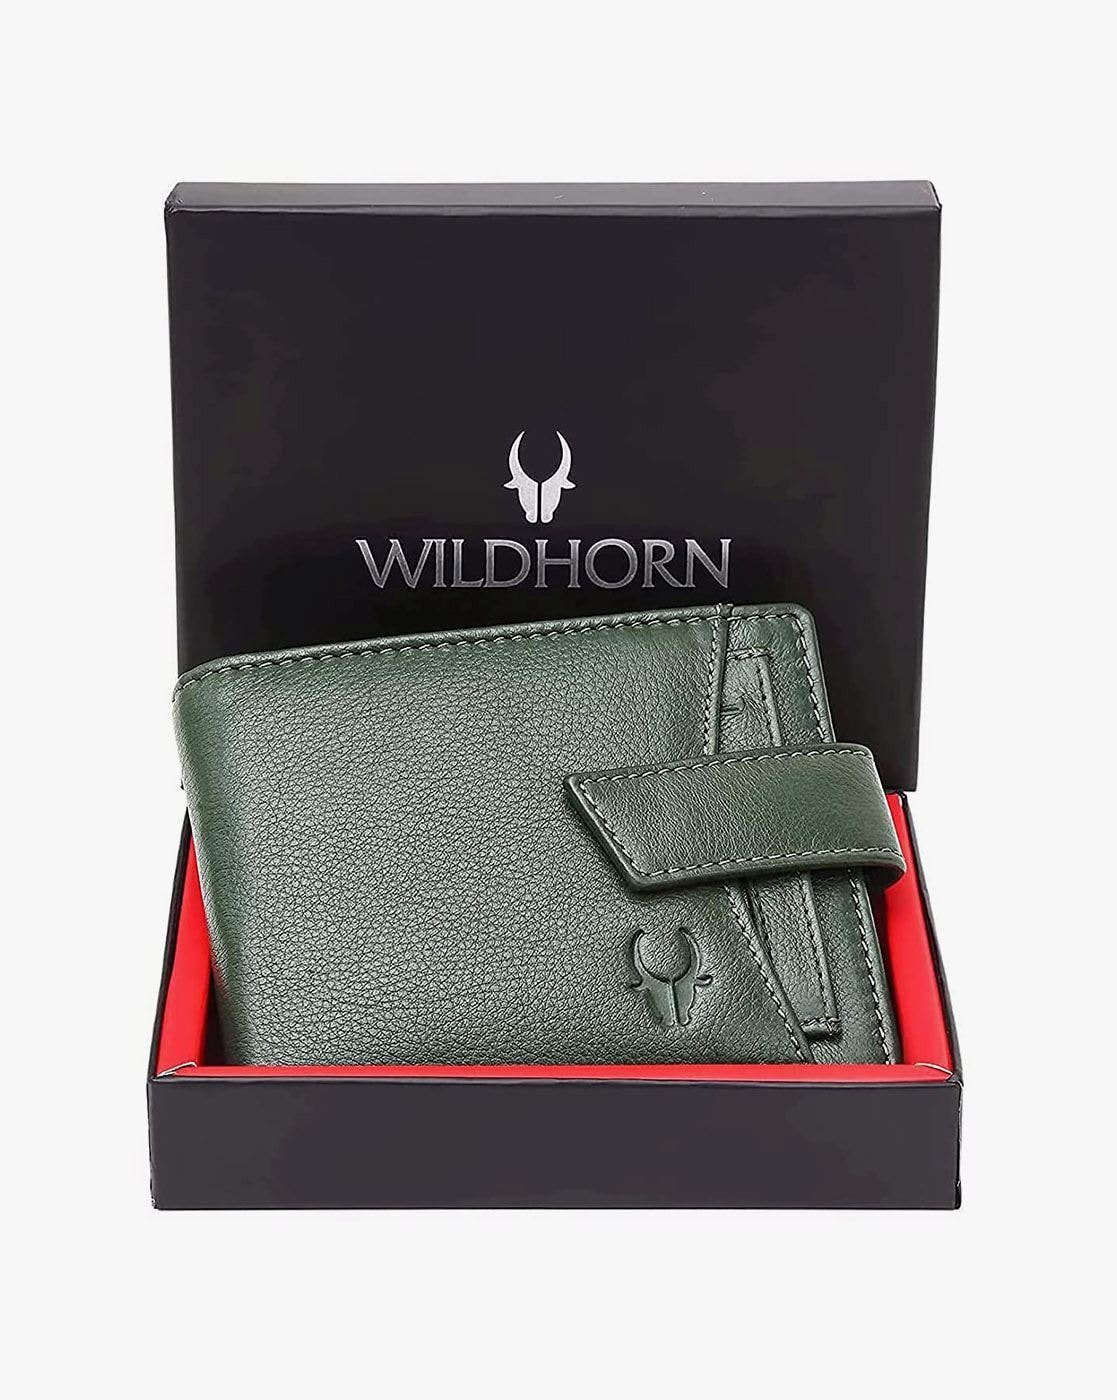 WildHorn Gift Hamper for Men I Leather Wallet & Belt Combo Gift Set I Gift  for Friend, Boyfriend,Husband,Father, Son etc (New Blue) : Amazon.in:  Fashion